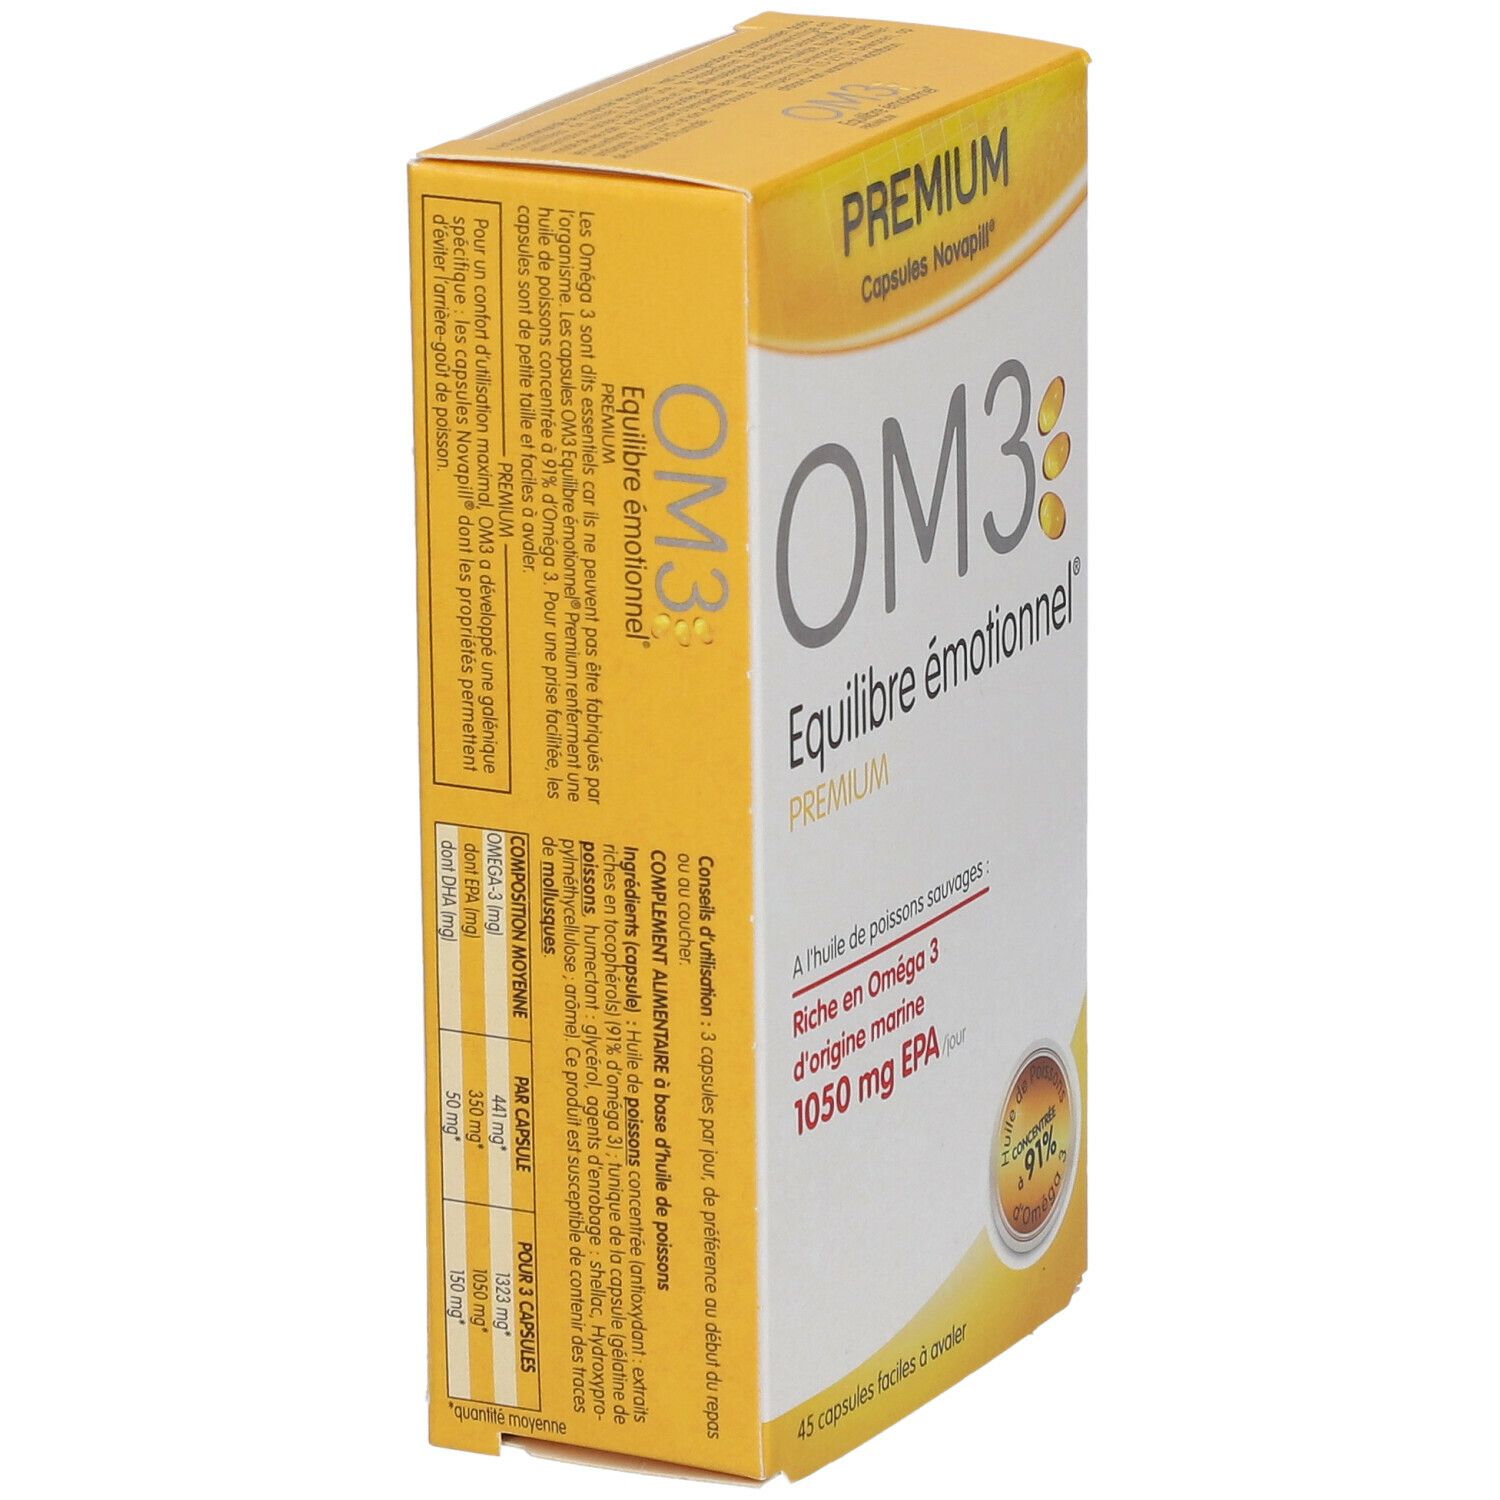 Premium Novapill® capsules OM3 Equilibre émotionnel®